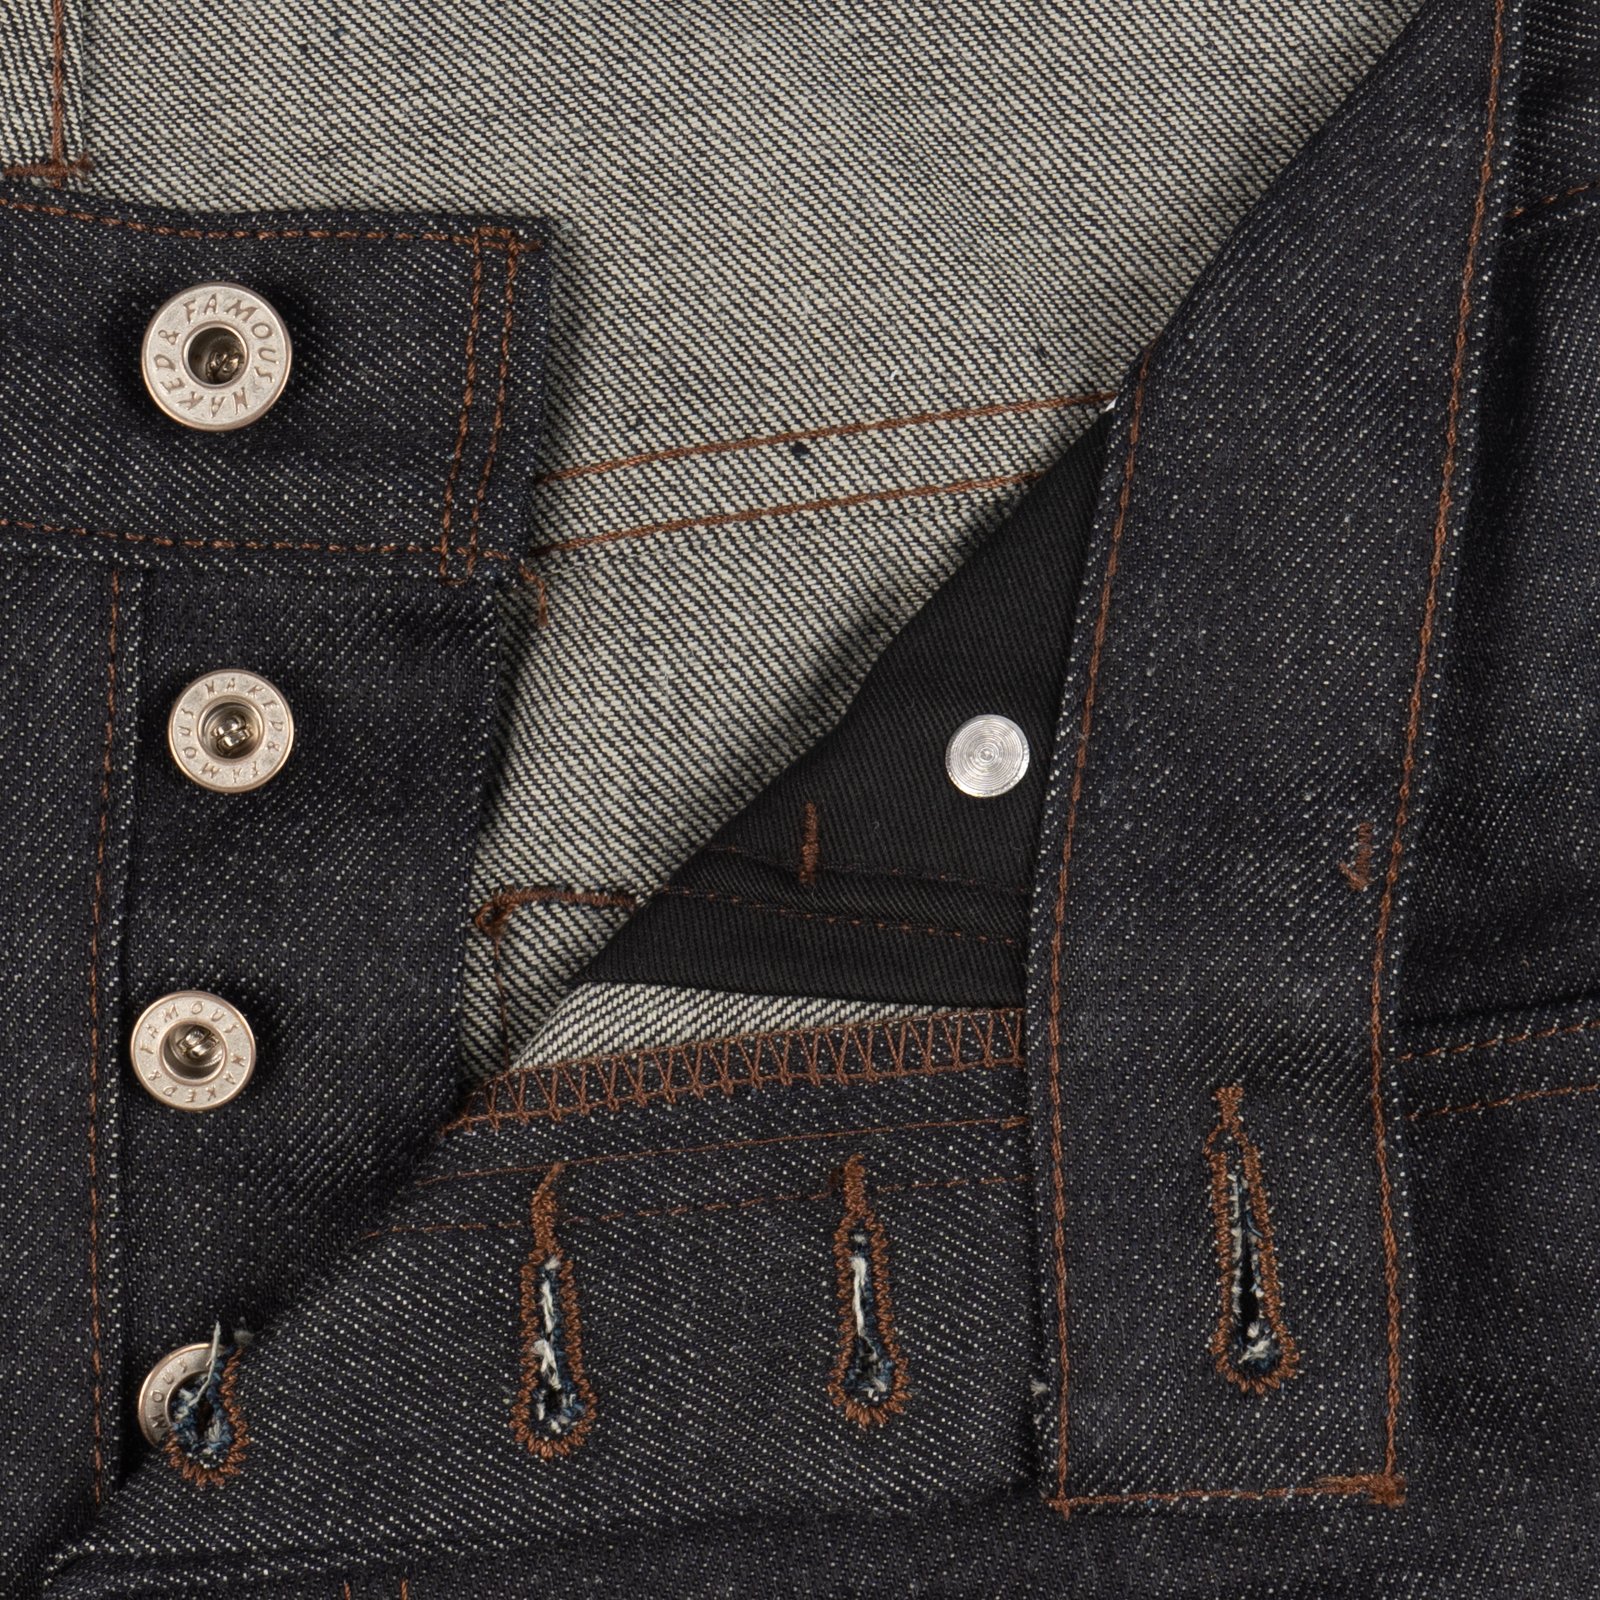  Blue Grass Jeans - button fly   